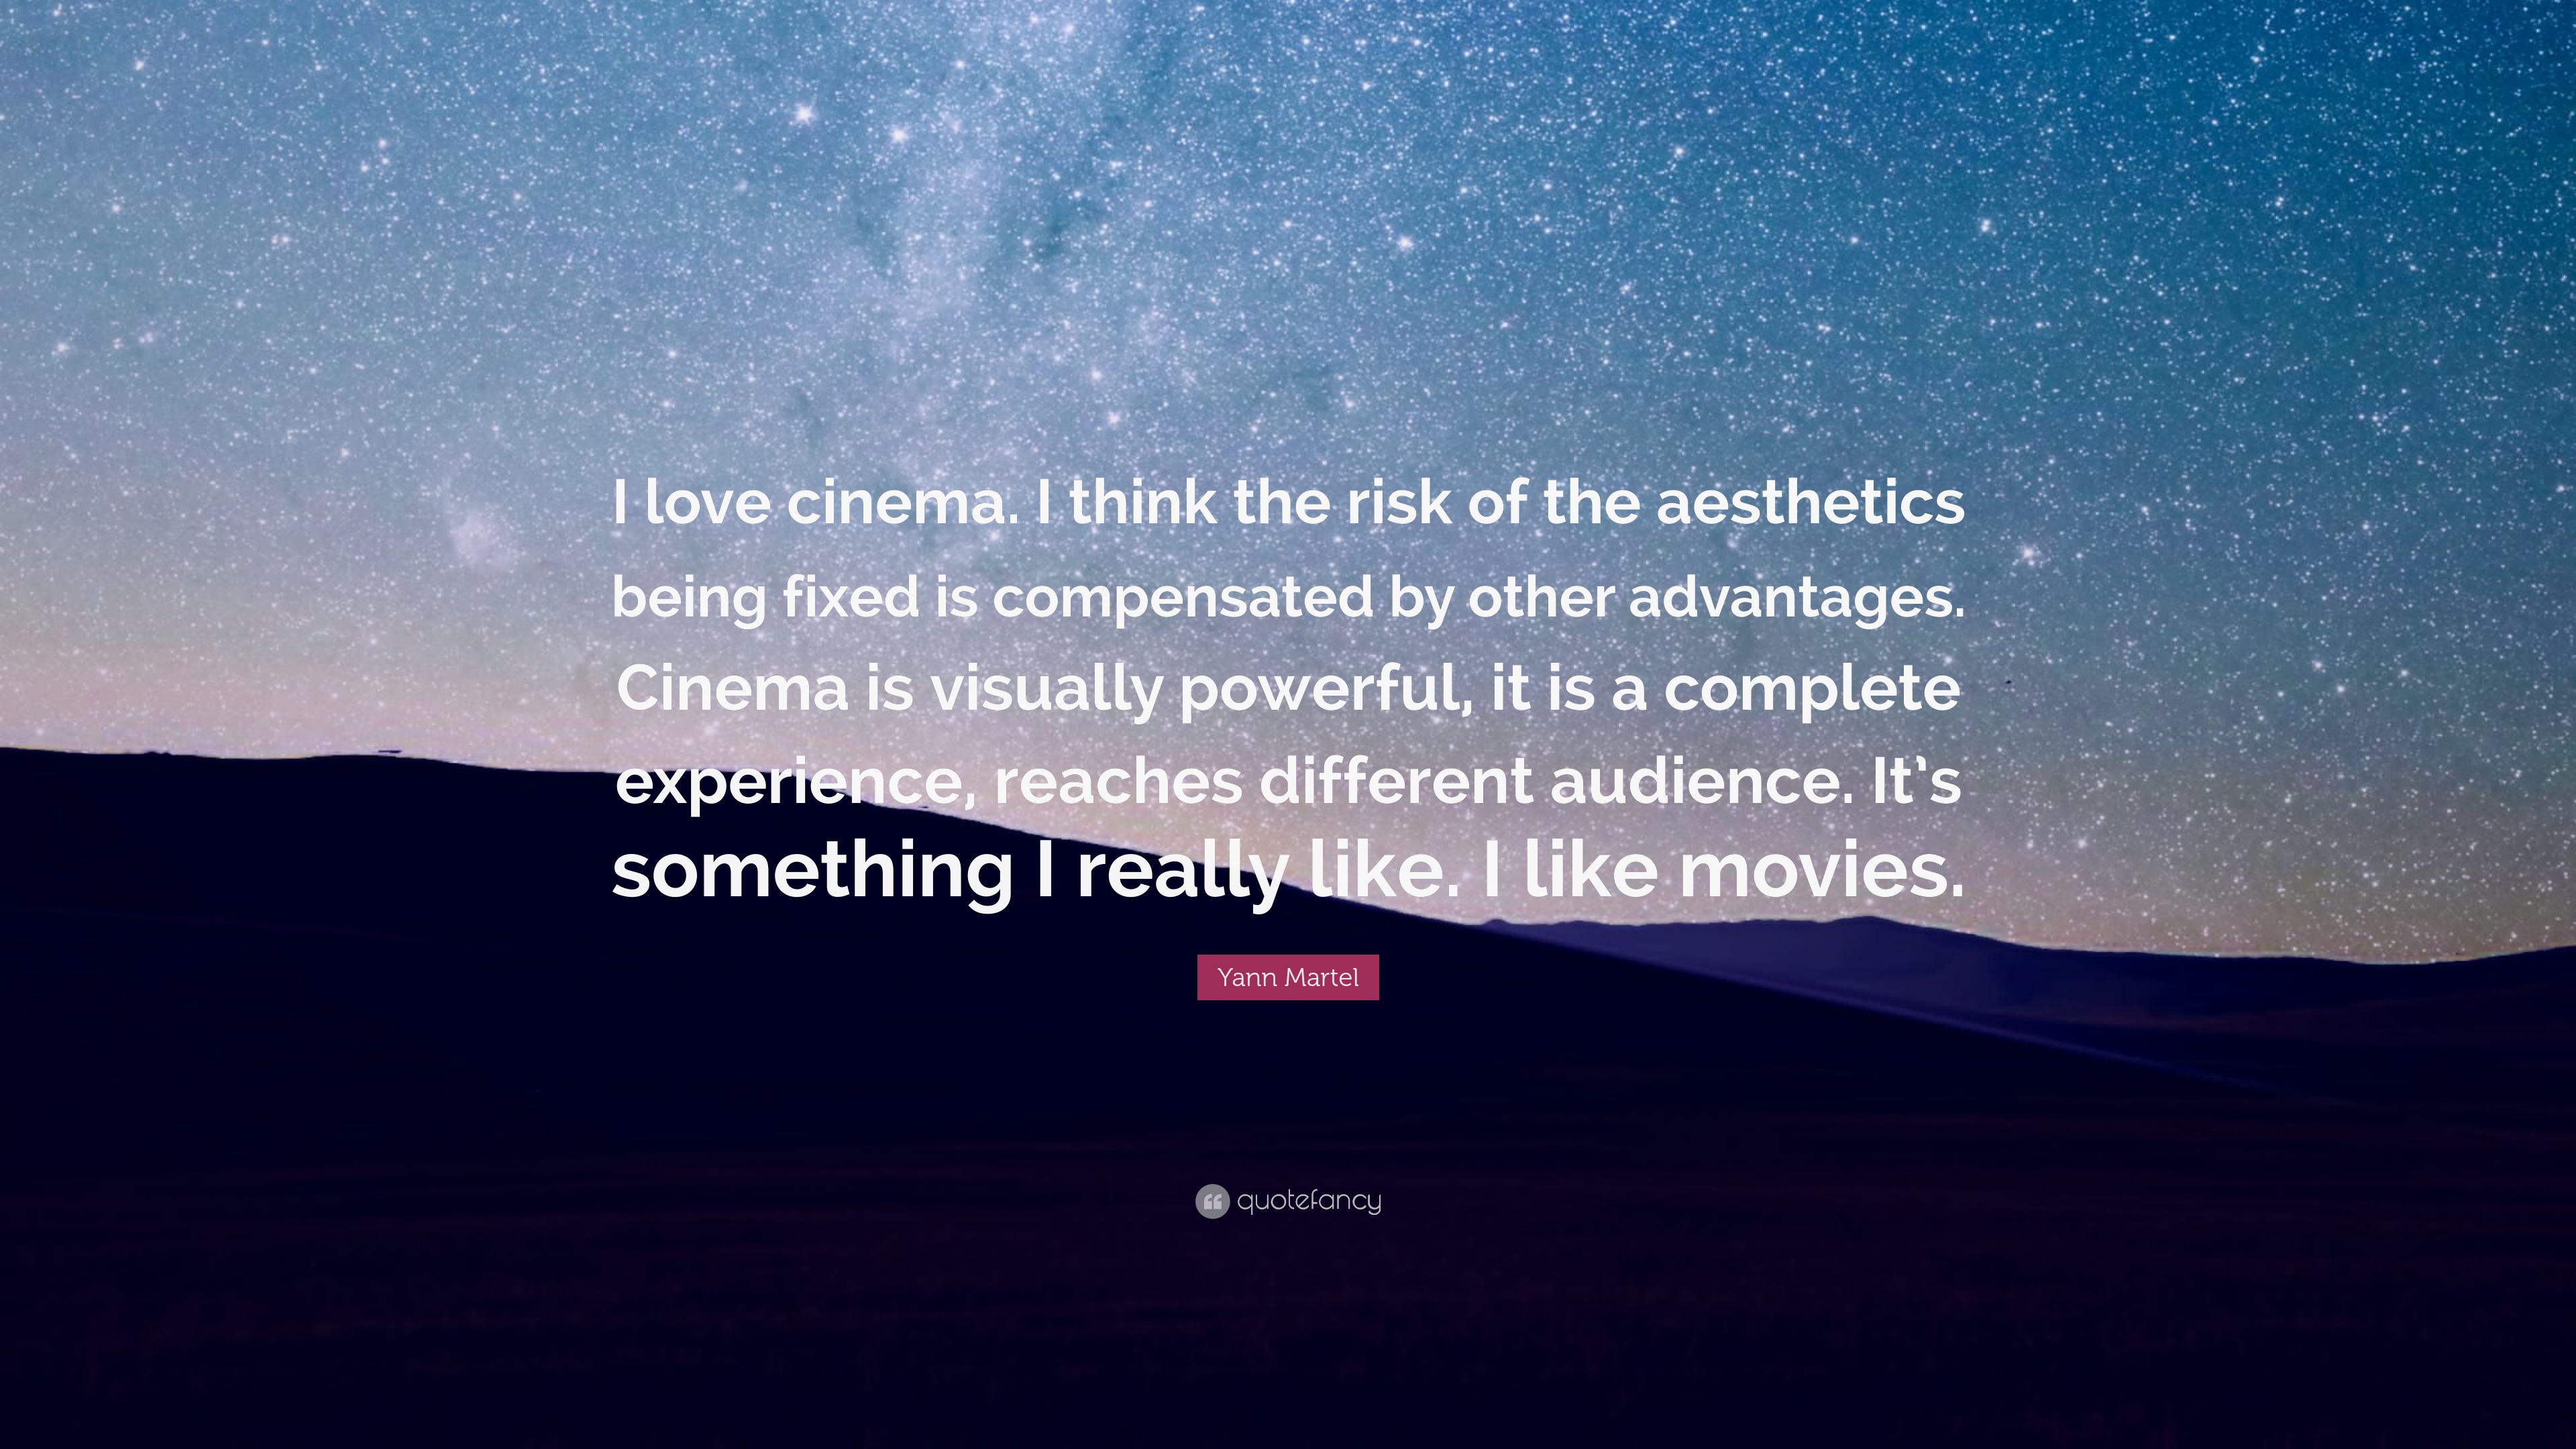 Yann Martel Quote: “I love cinema. I think the risk